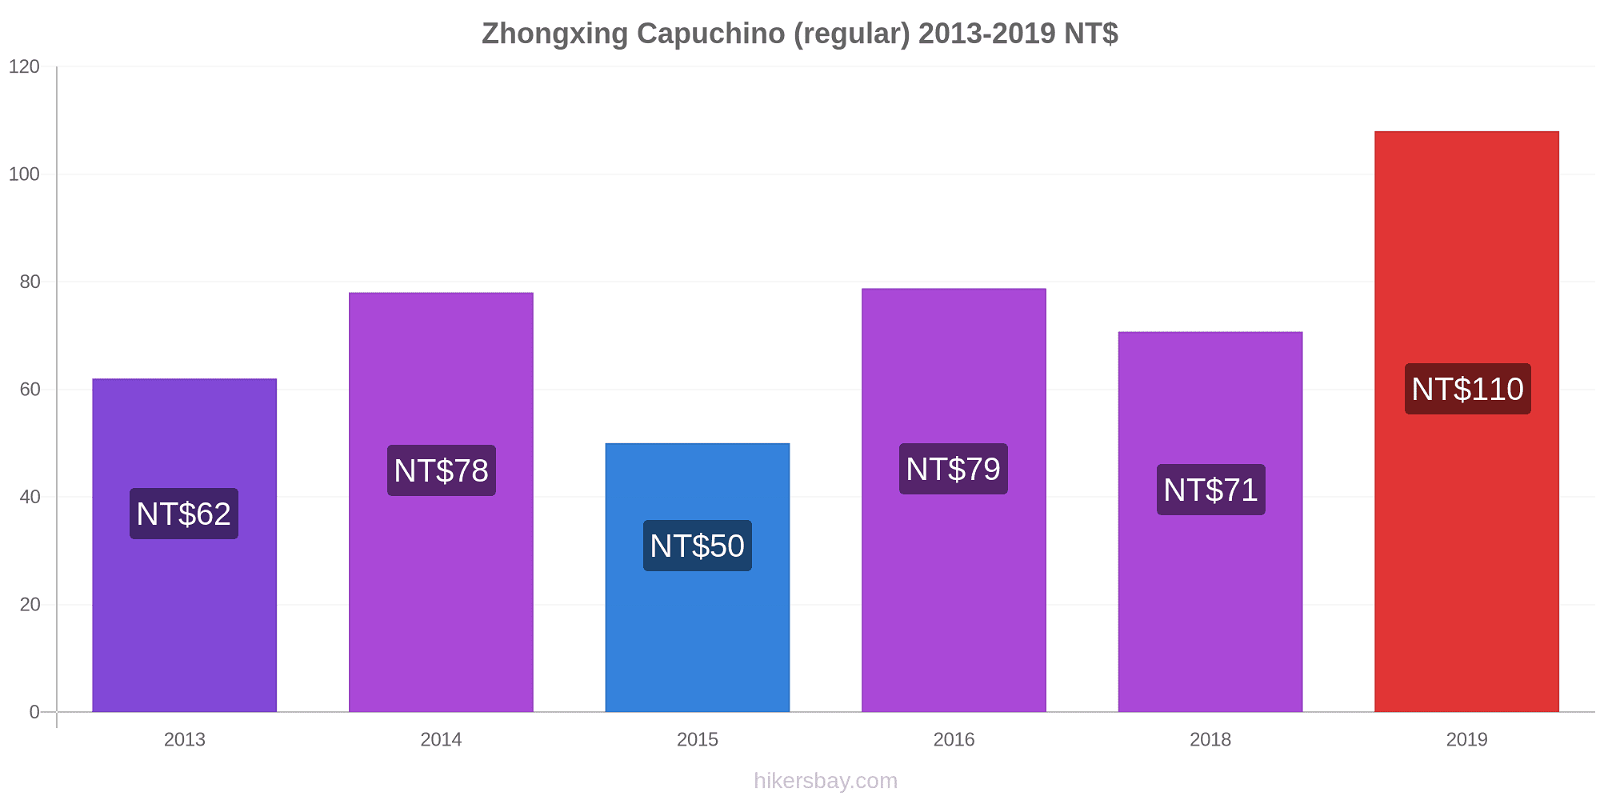 Zhongxing cambios de precios Capuchino (regular) hikersbay.com